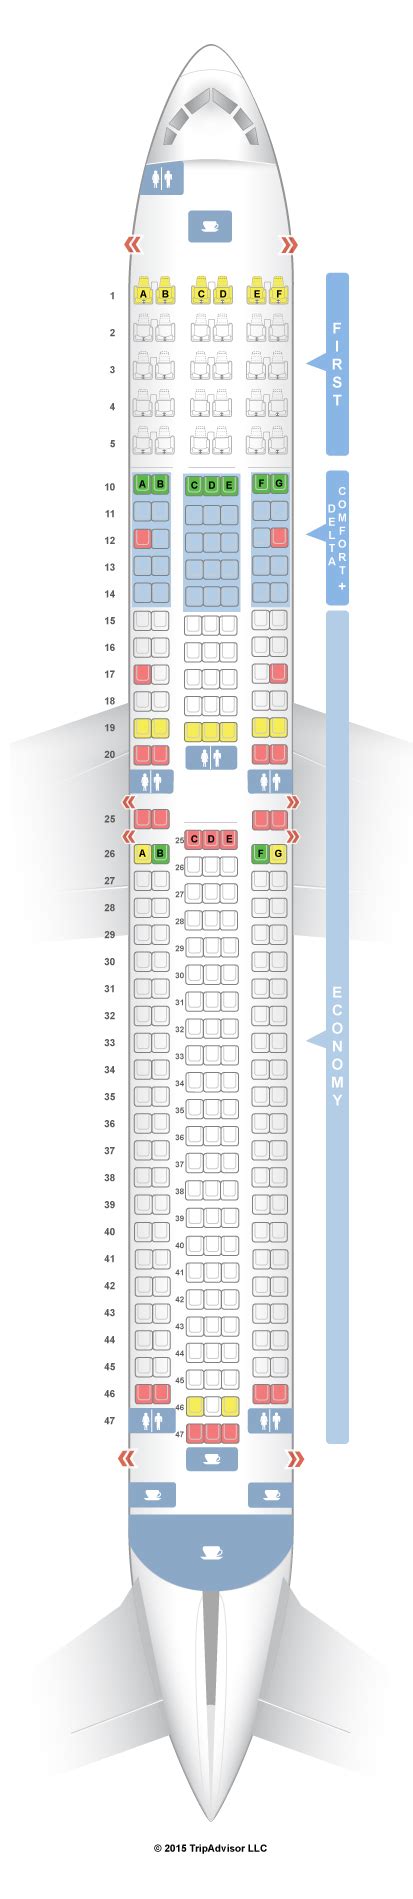 Delta Boeing 767 Seat Map Porn Sex Picture